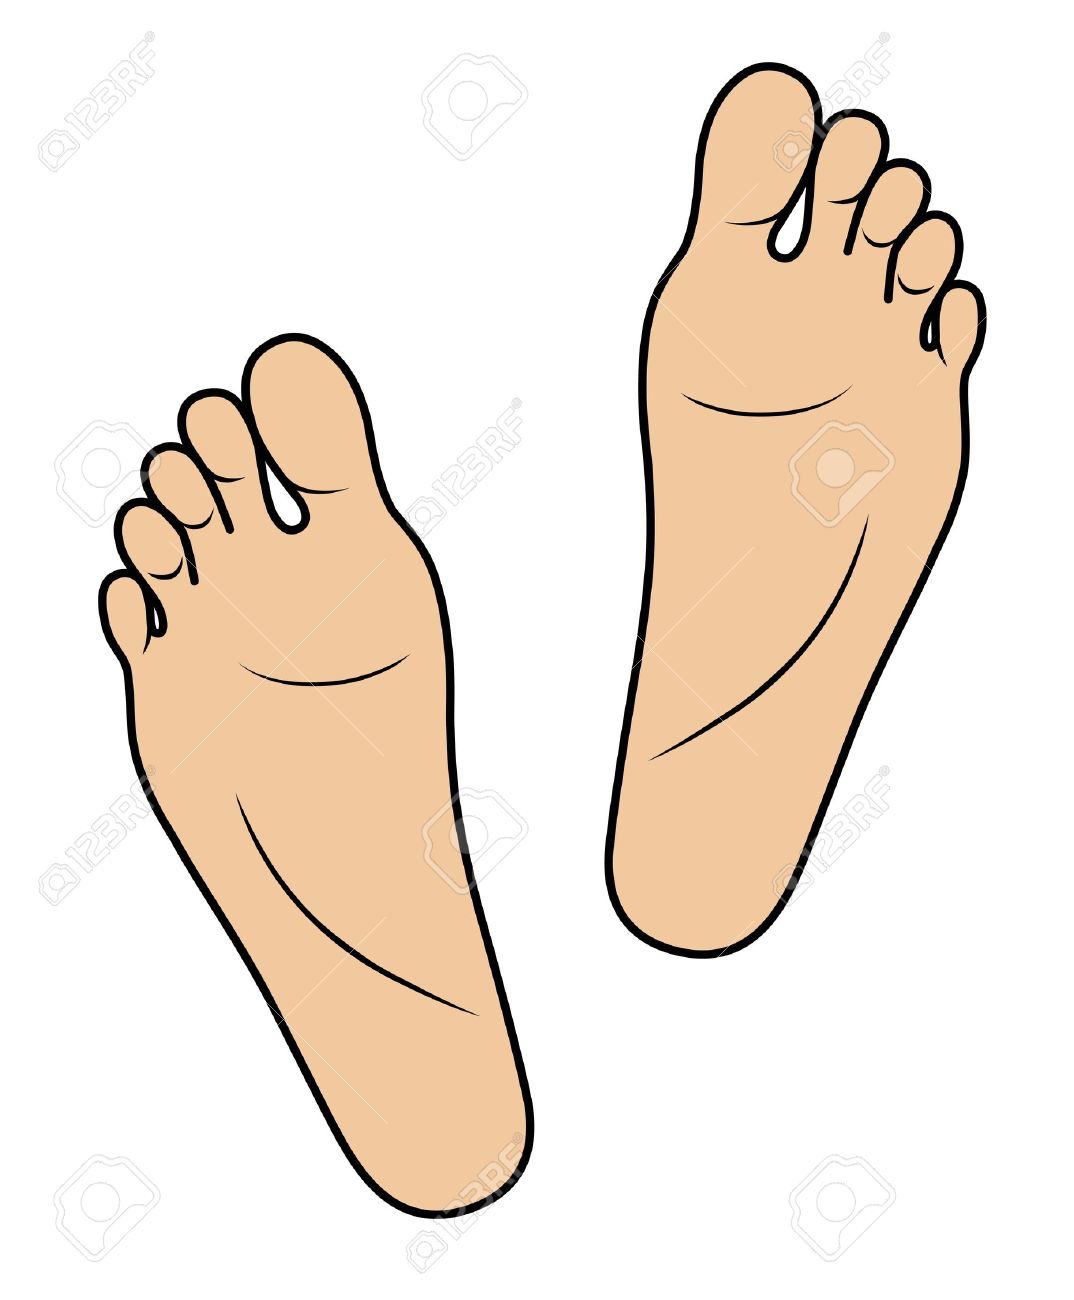 Kicking foot clipart free cli